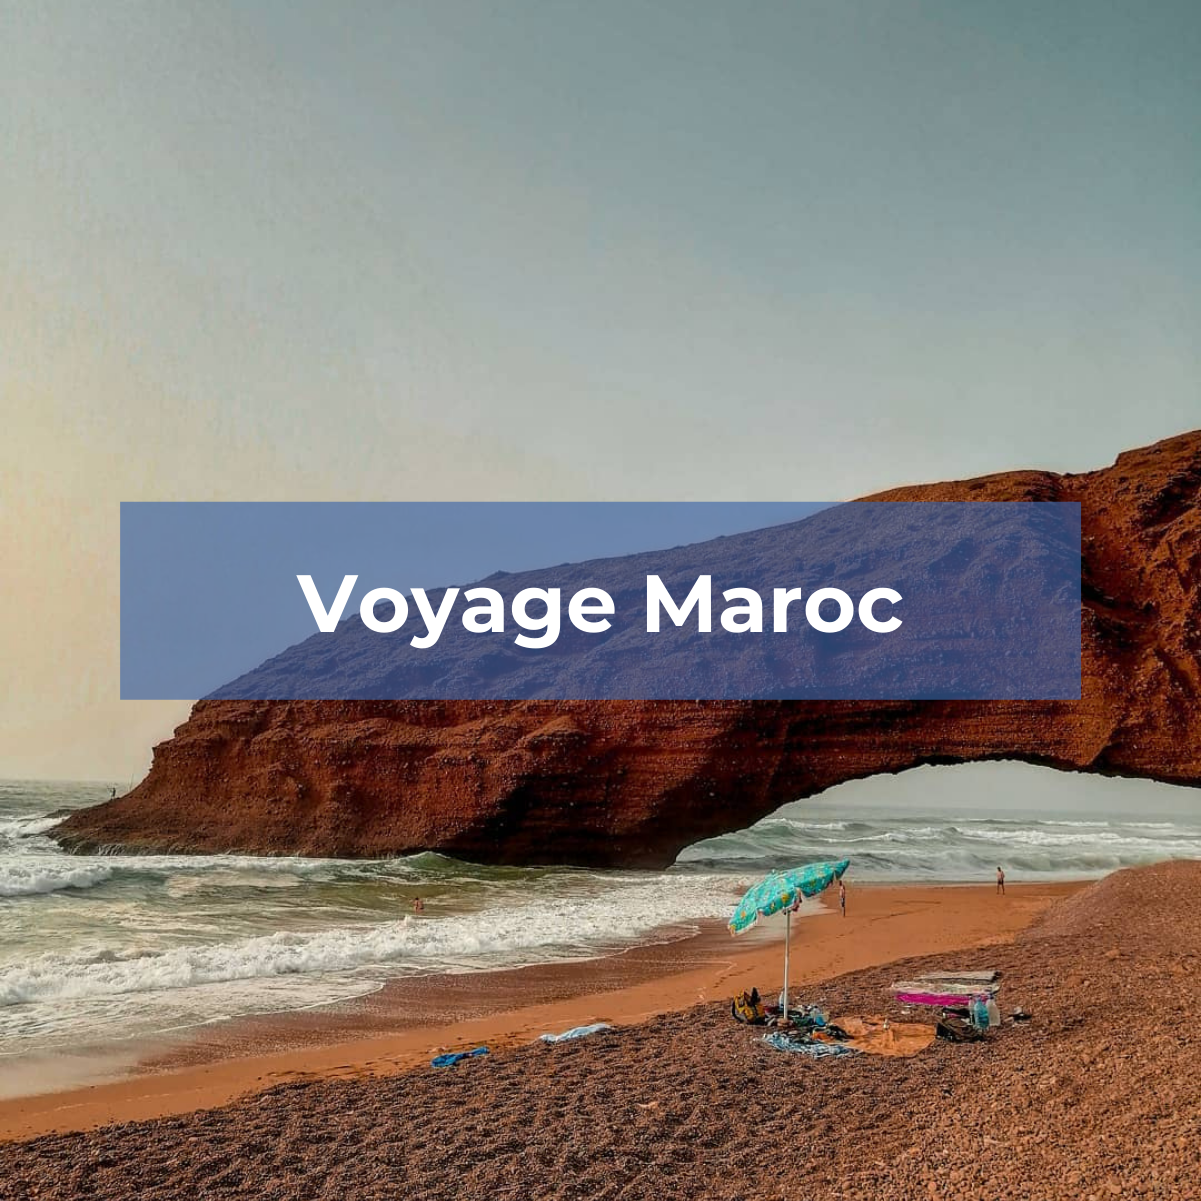 Voyage au Maroc - Sidi Ifni, Maroc - Instagram © @abdu_traveler